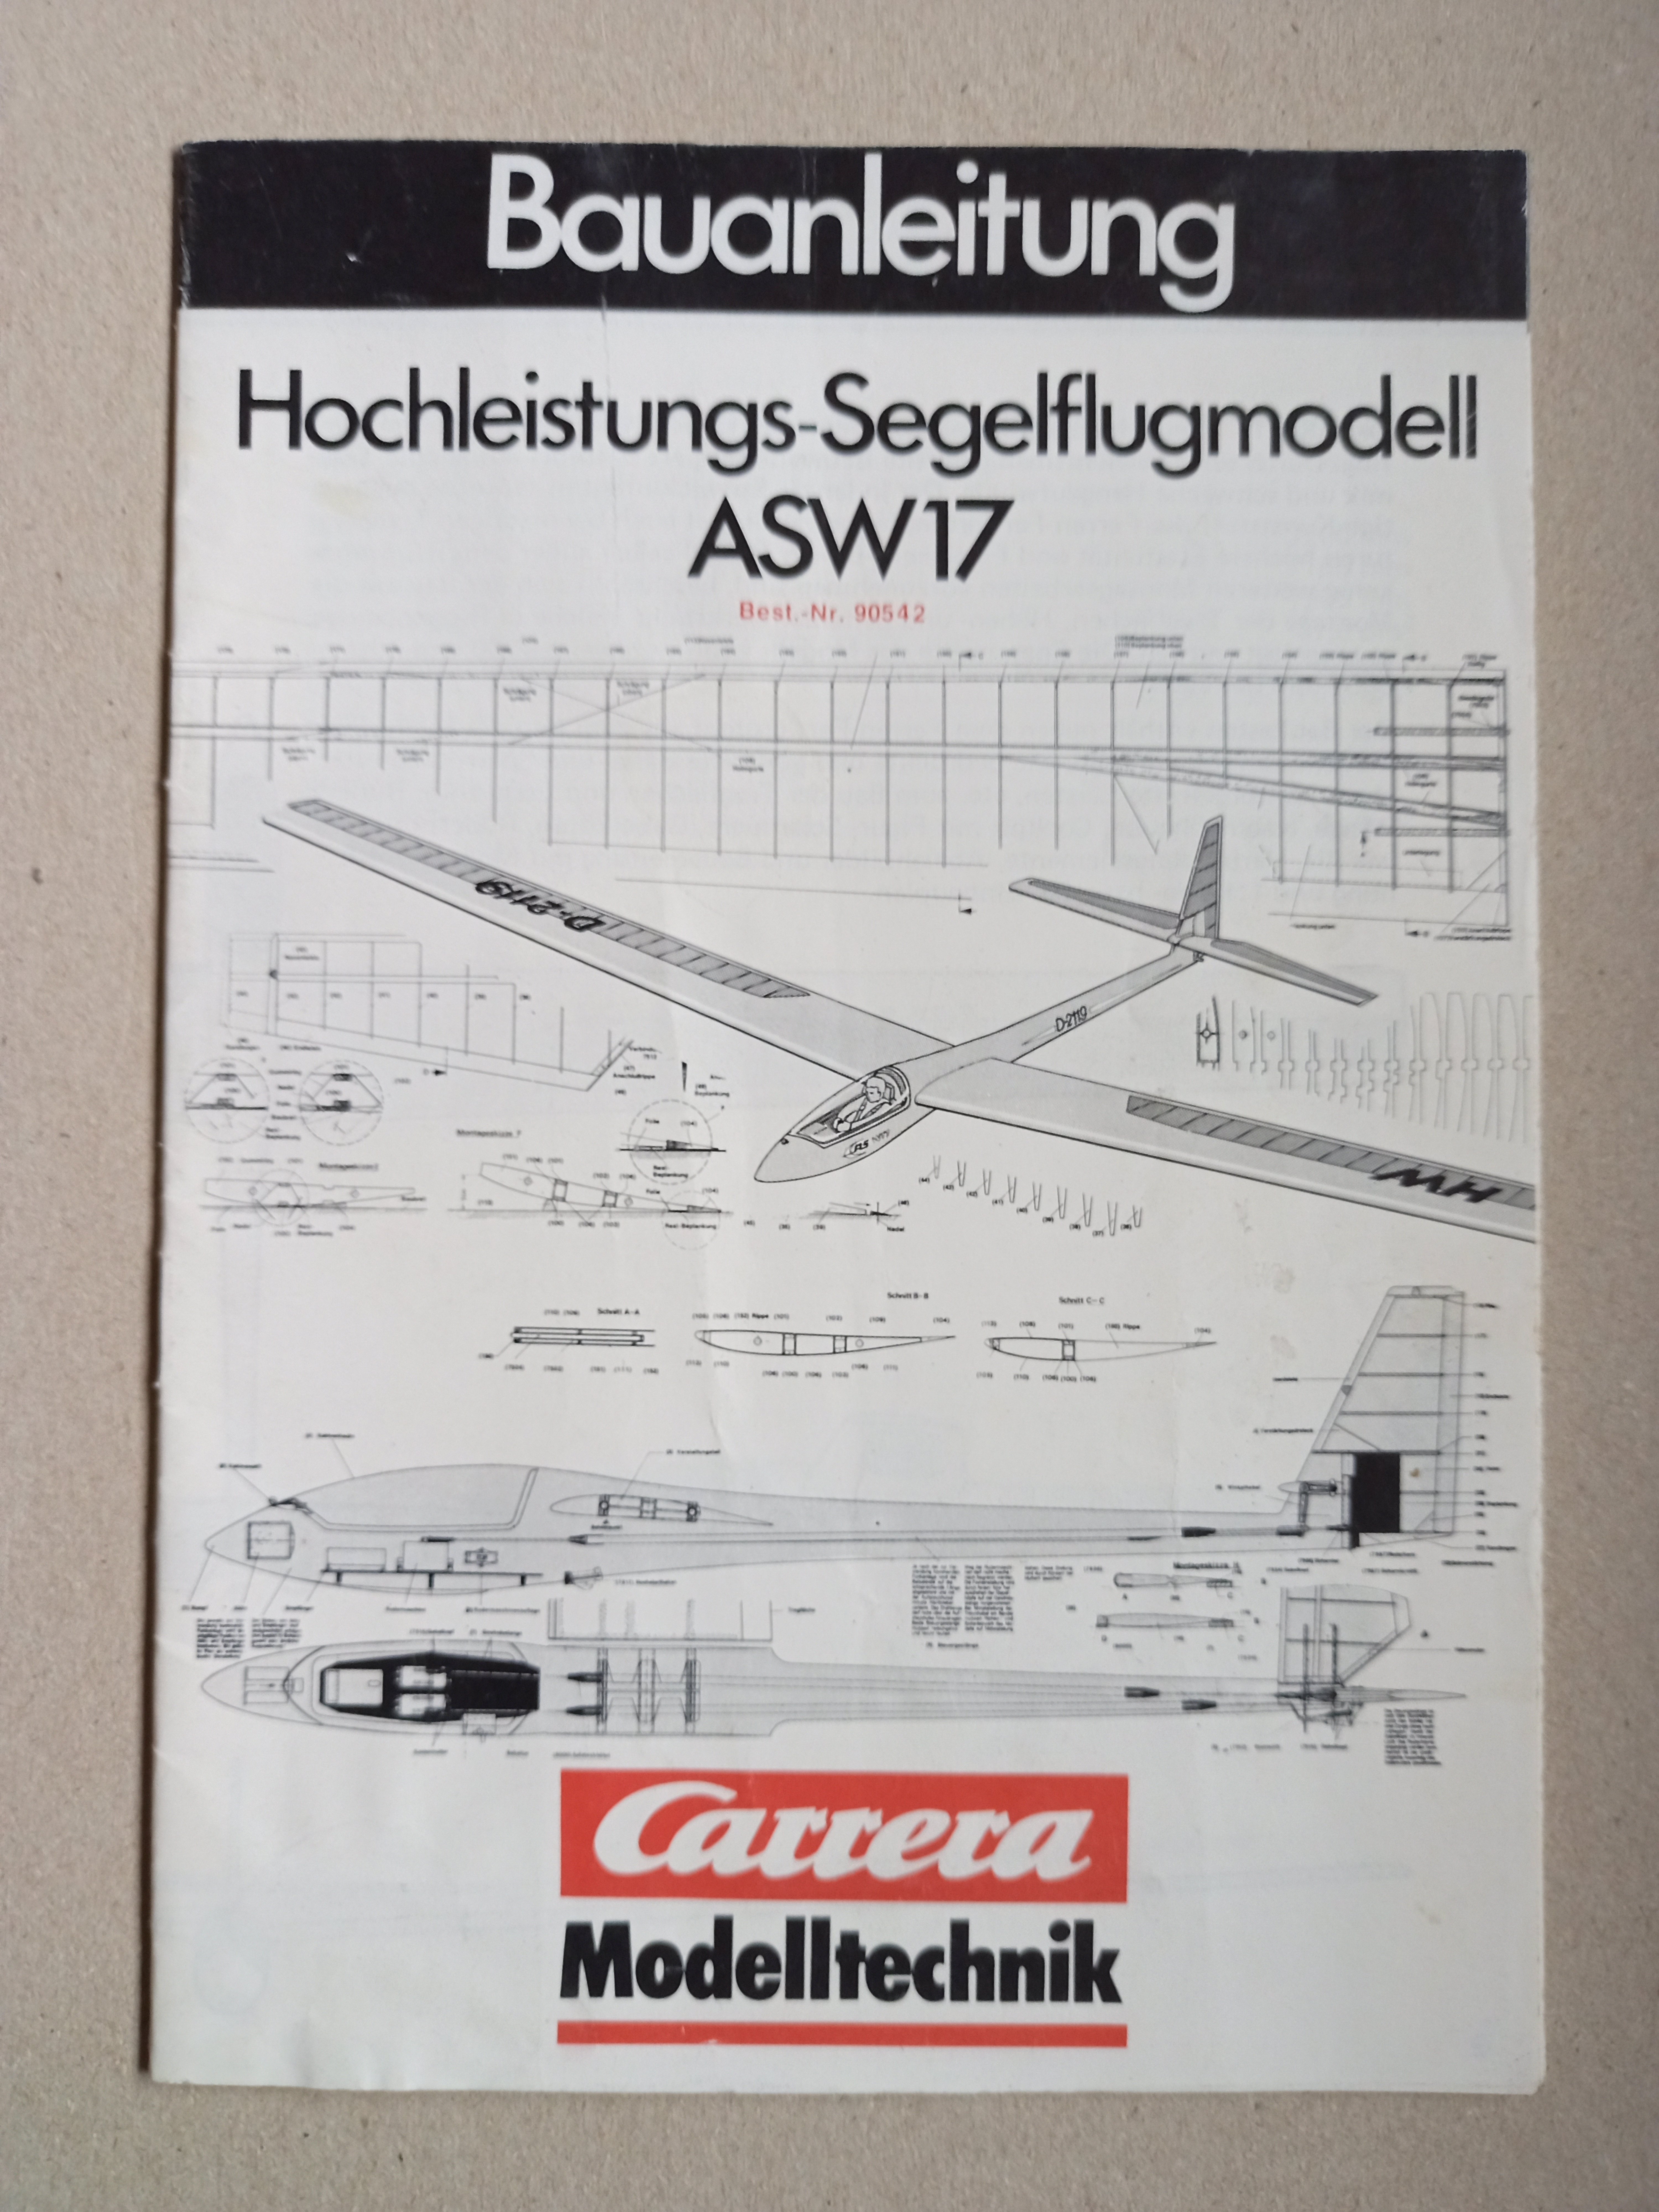 Bauanleitung Carrera ASW17 (Deutsches Segelflugmuseum mit Modellflug CC BY-NC-SA)